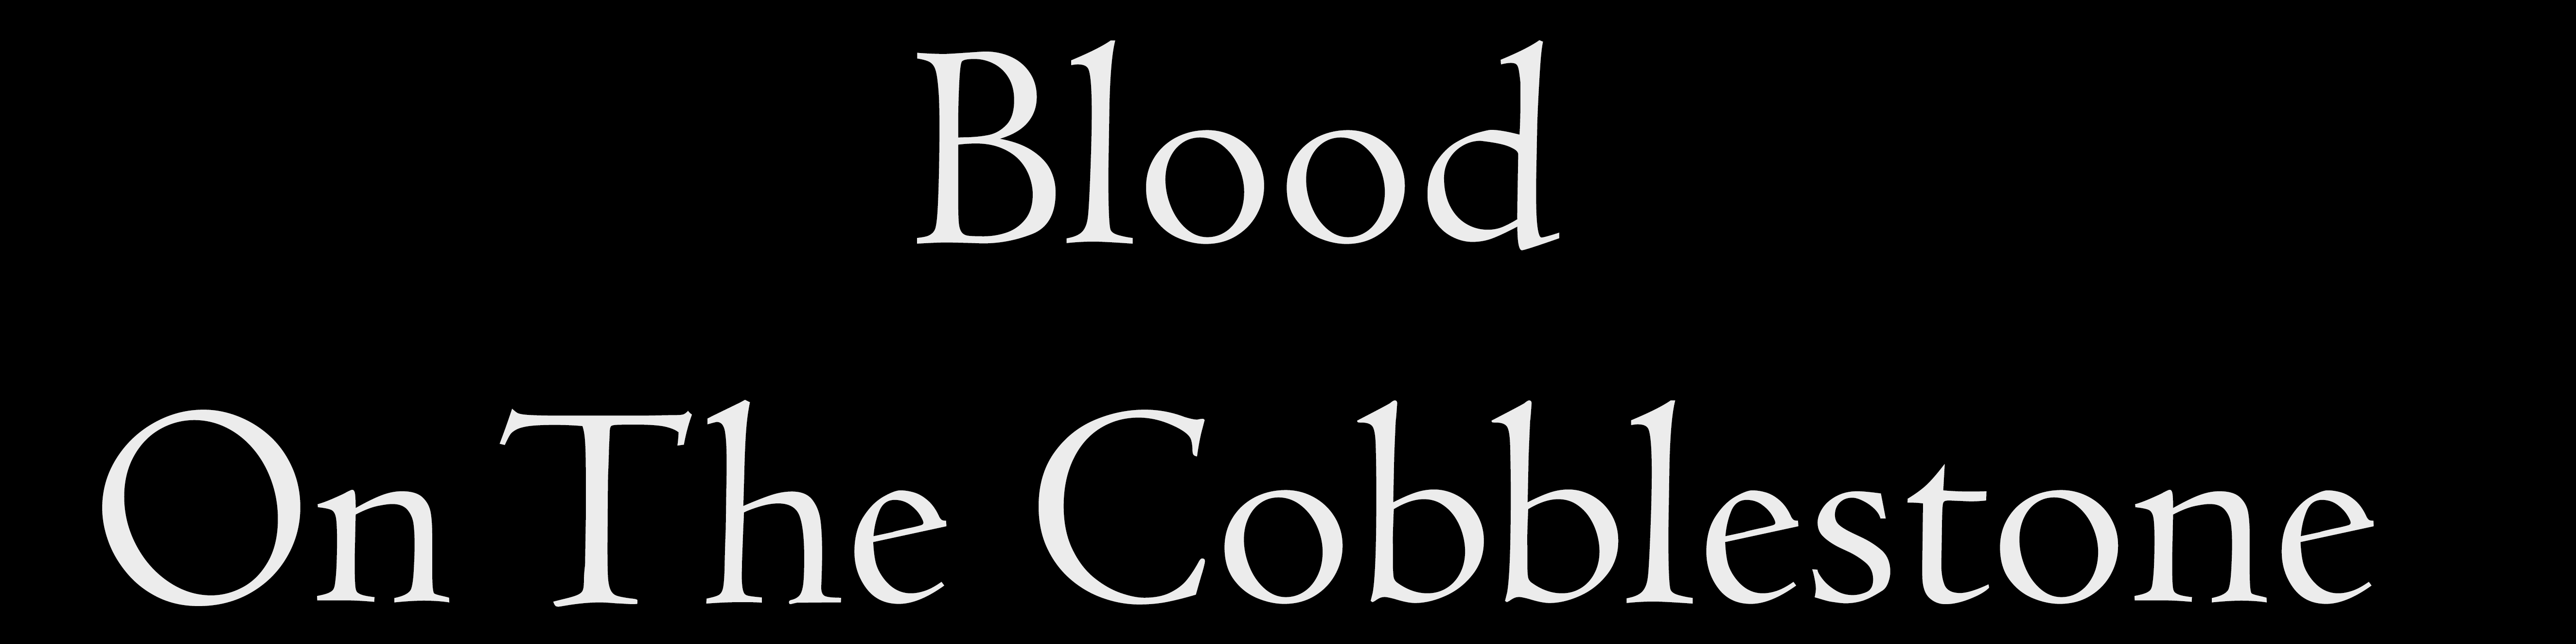 Blood on the cobblestone (A Dungeon World Adventure)